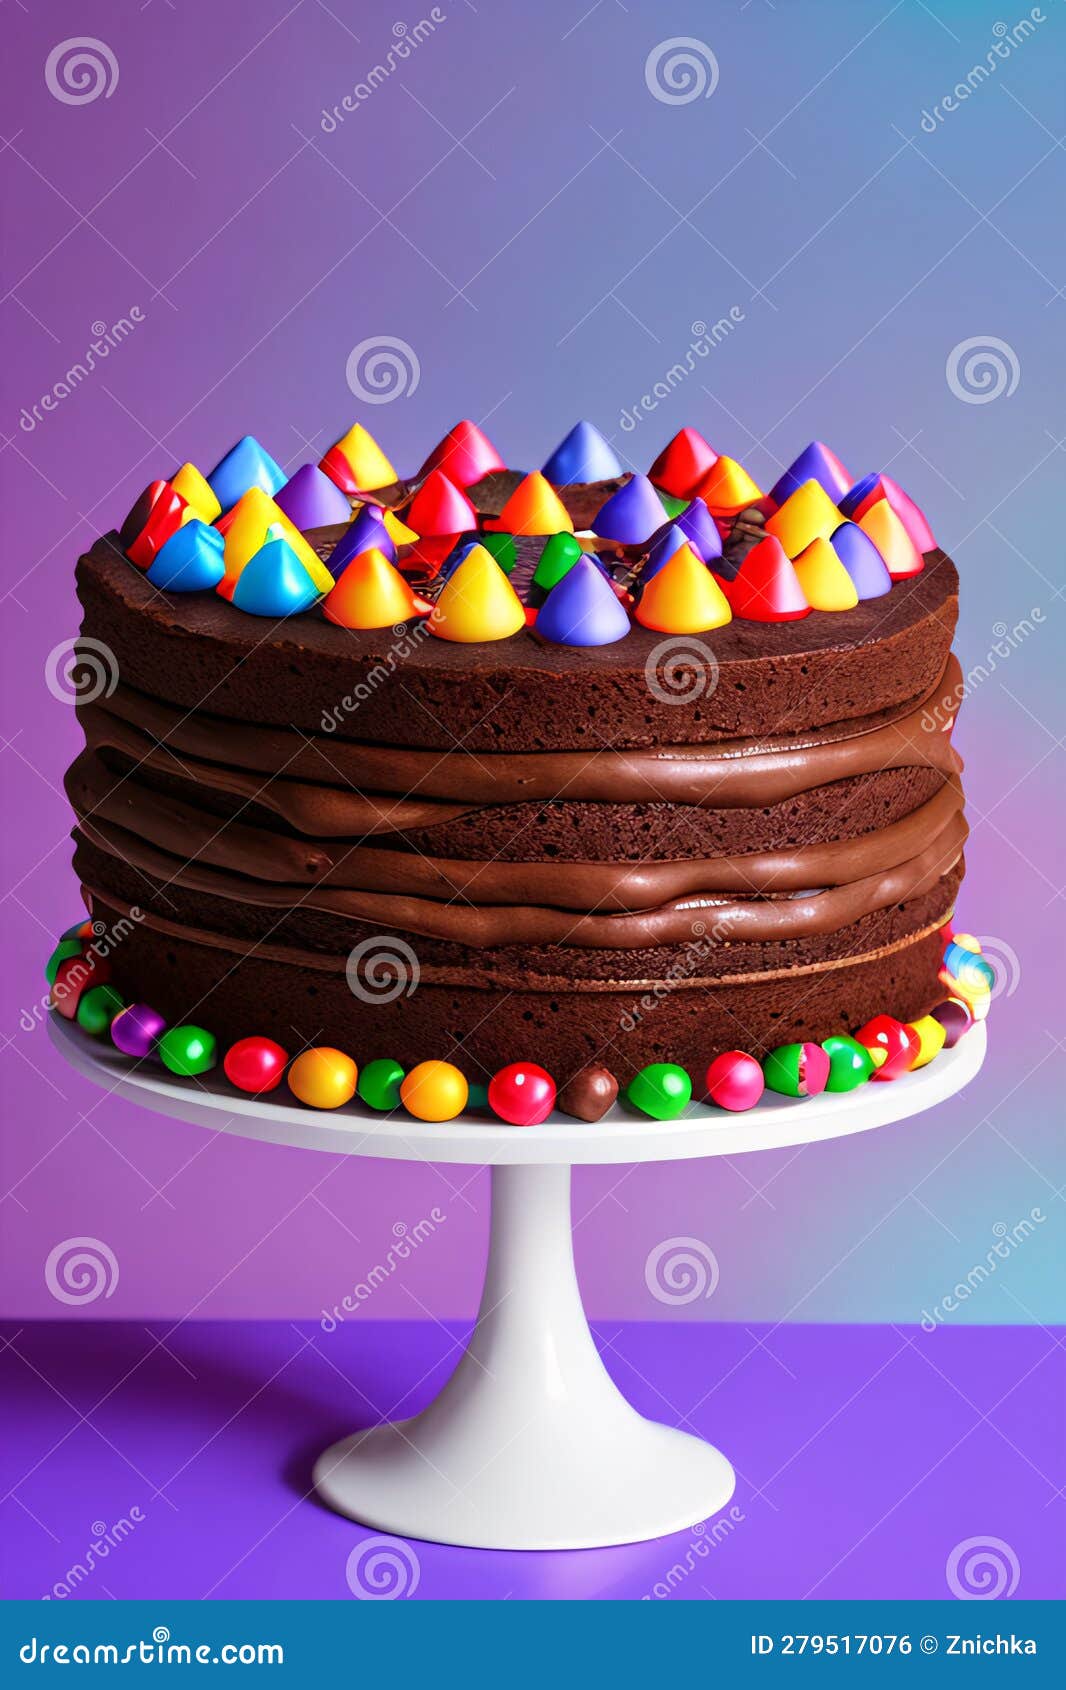 Round Chocolate Cake with Cream and Chocolate Shavings Stock Photo ...